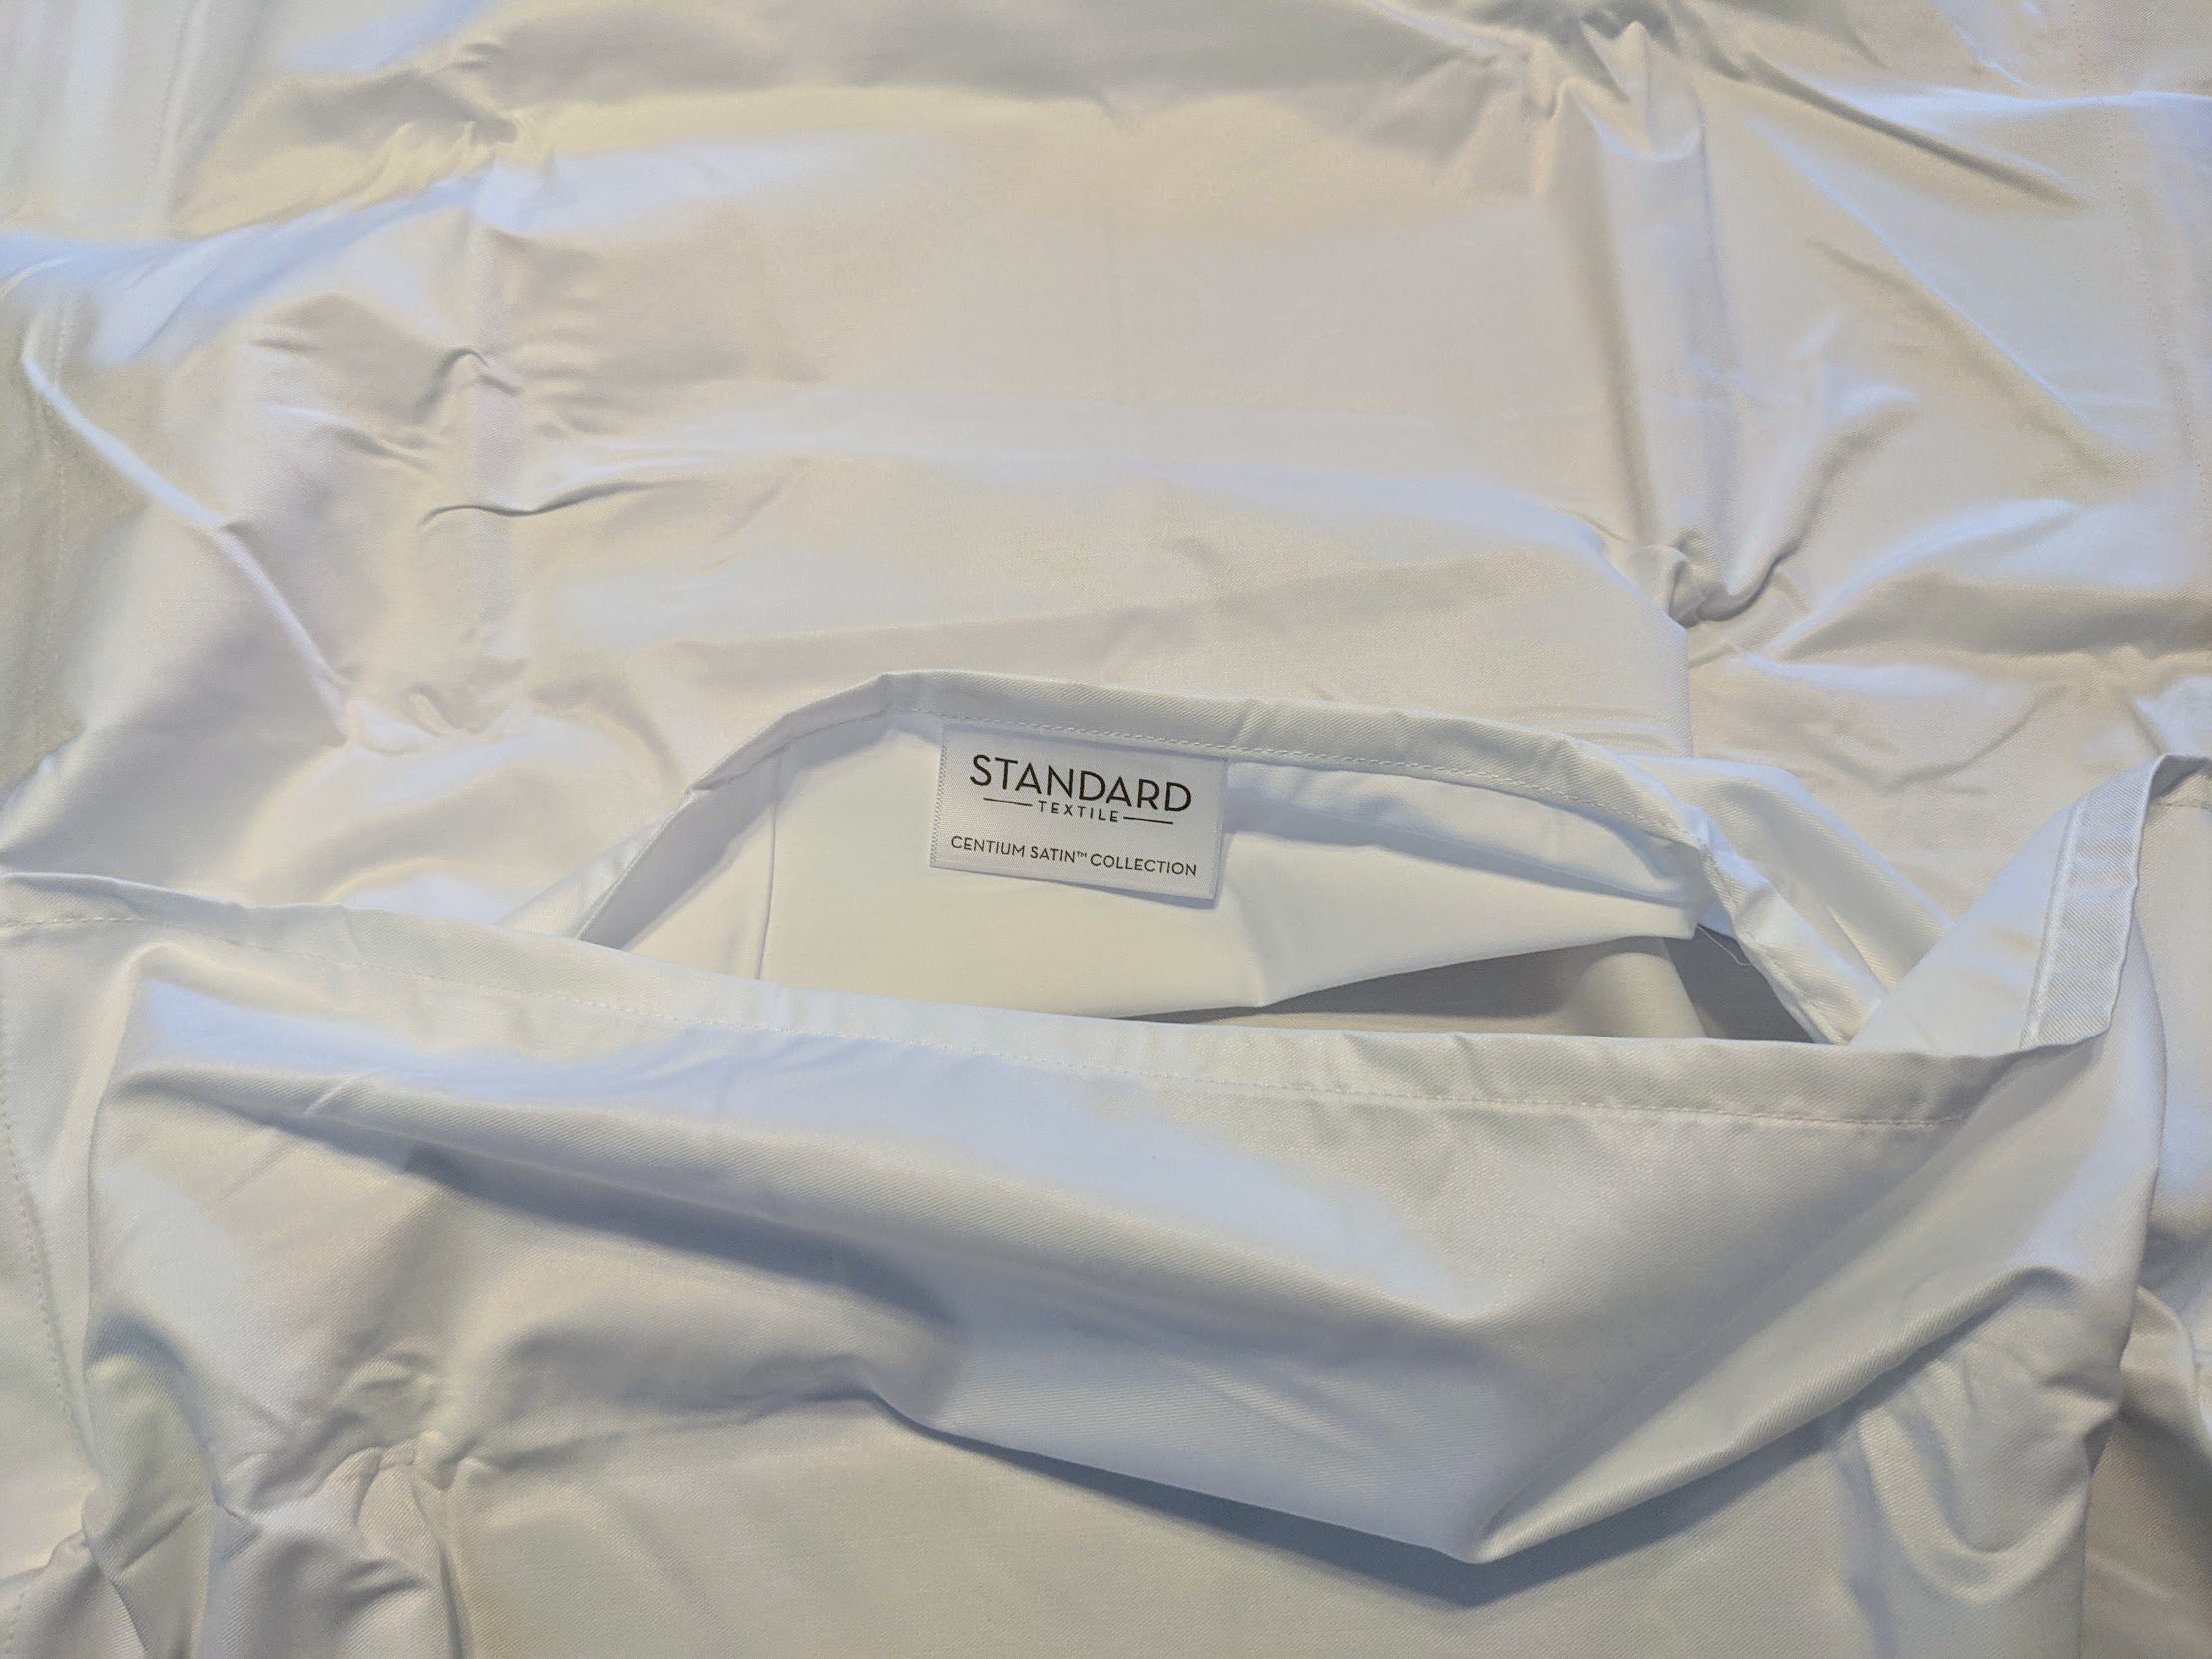 standard textile pillowcase